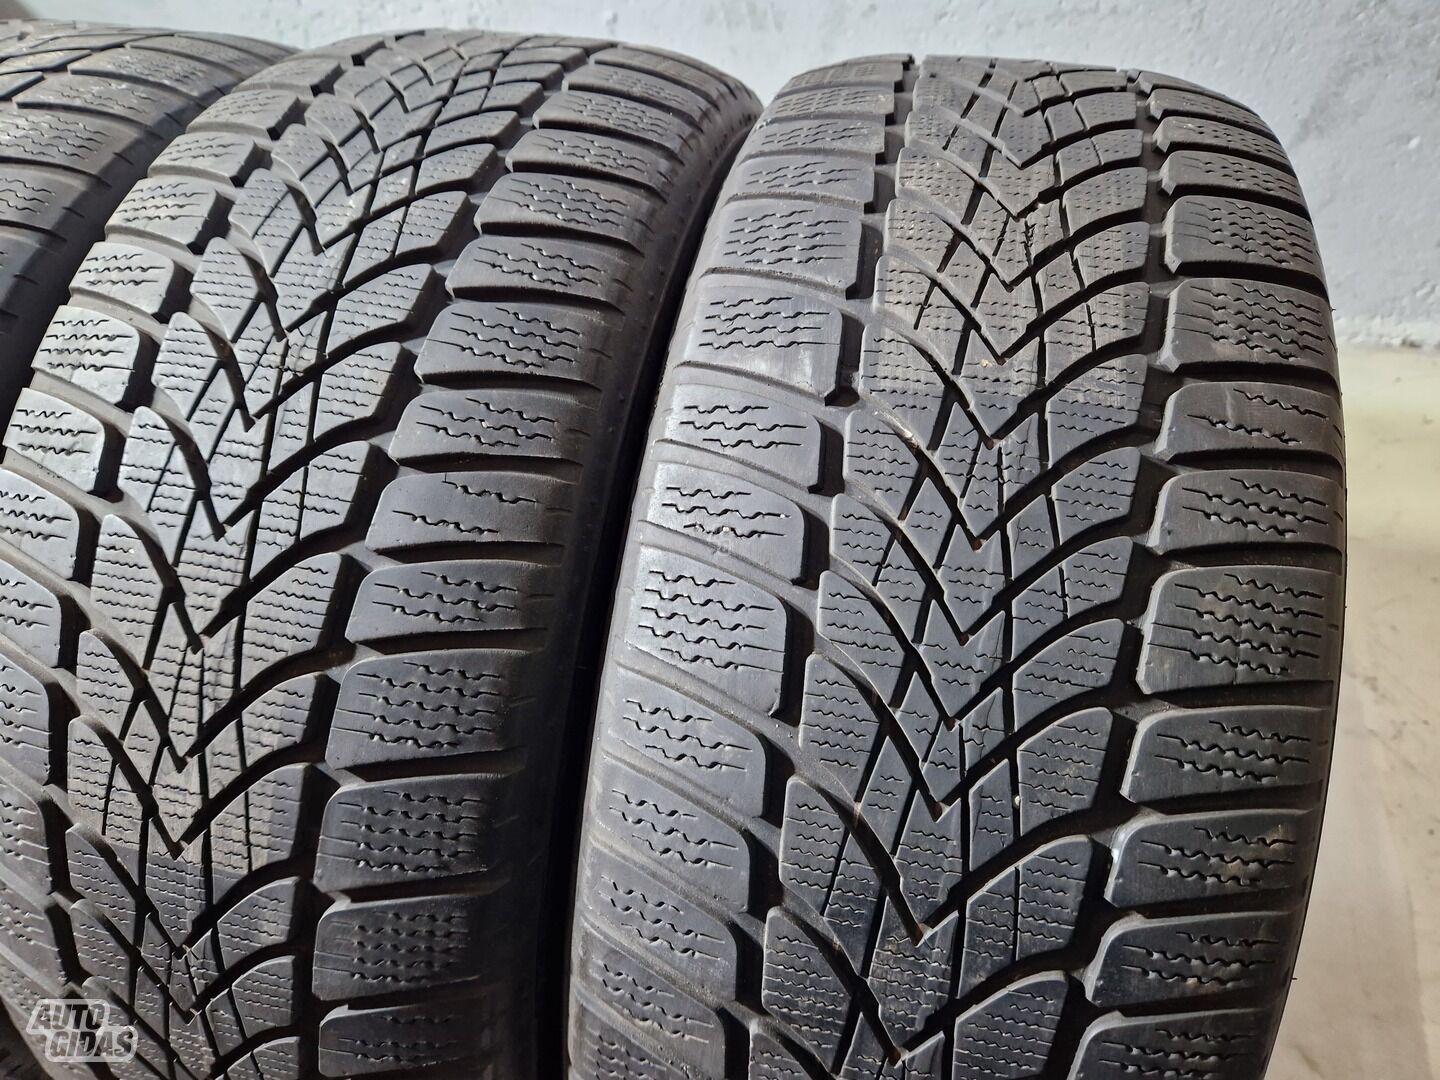 Dunlop 5-6mm, 2019m R17 winter tyres passanger car